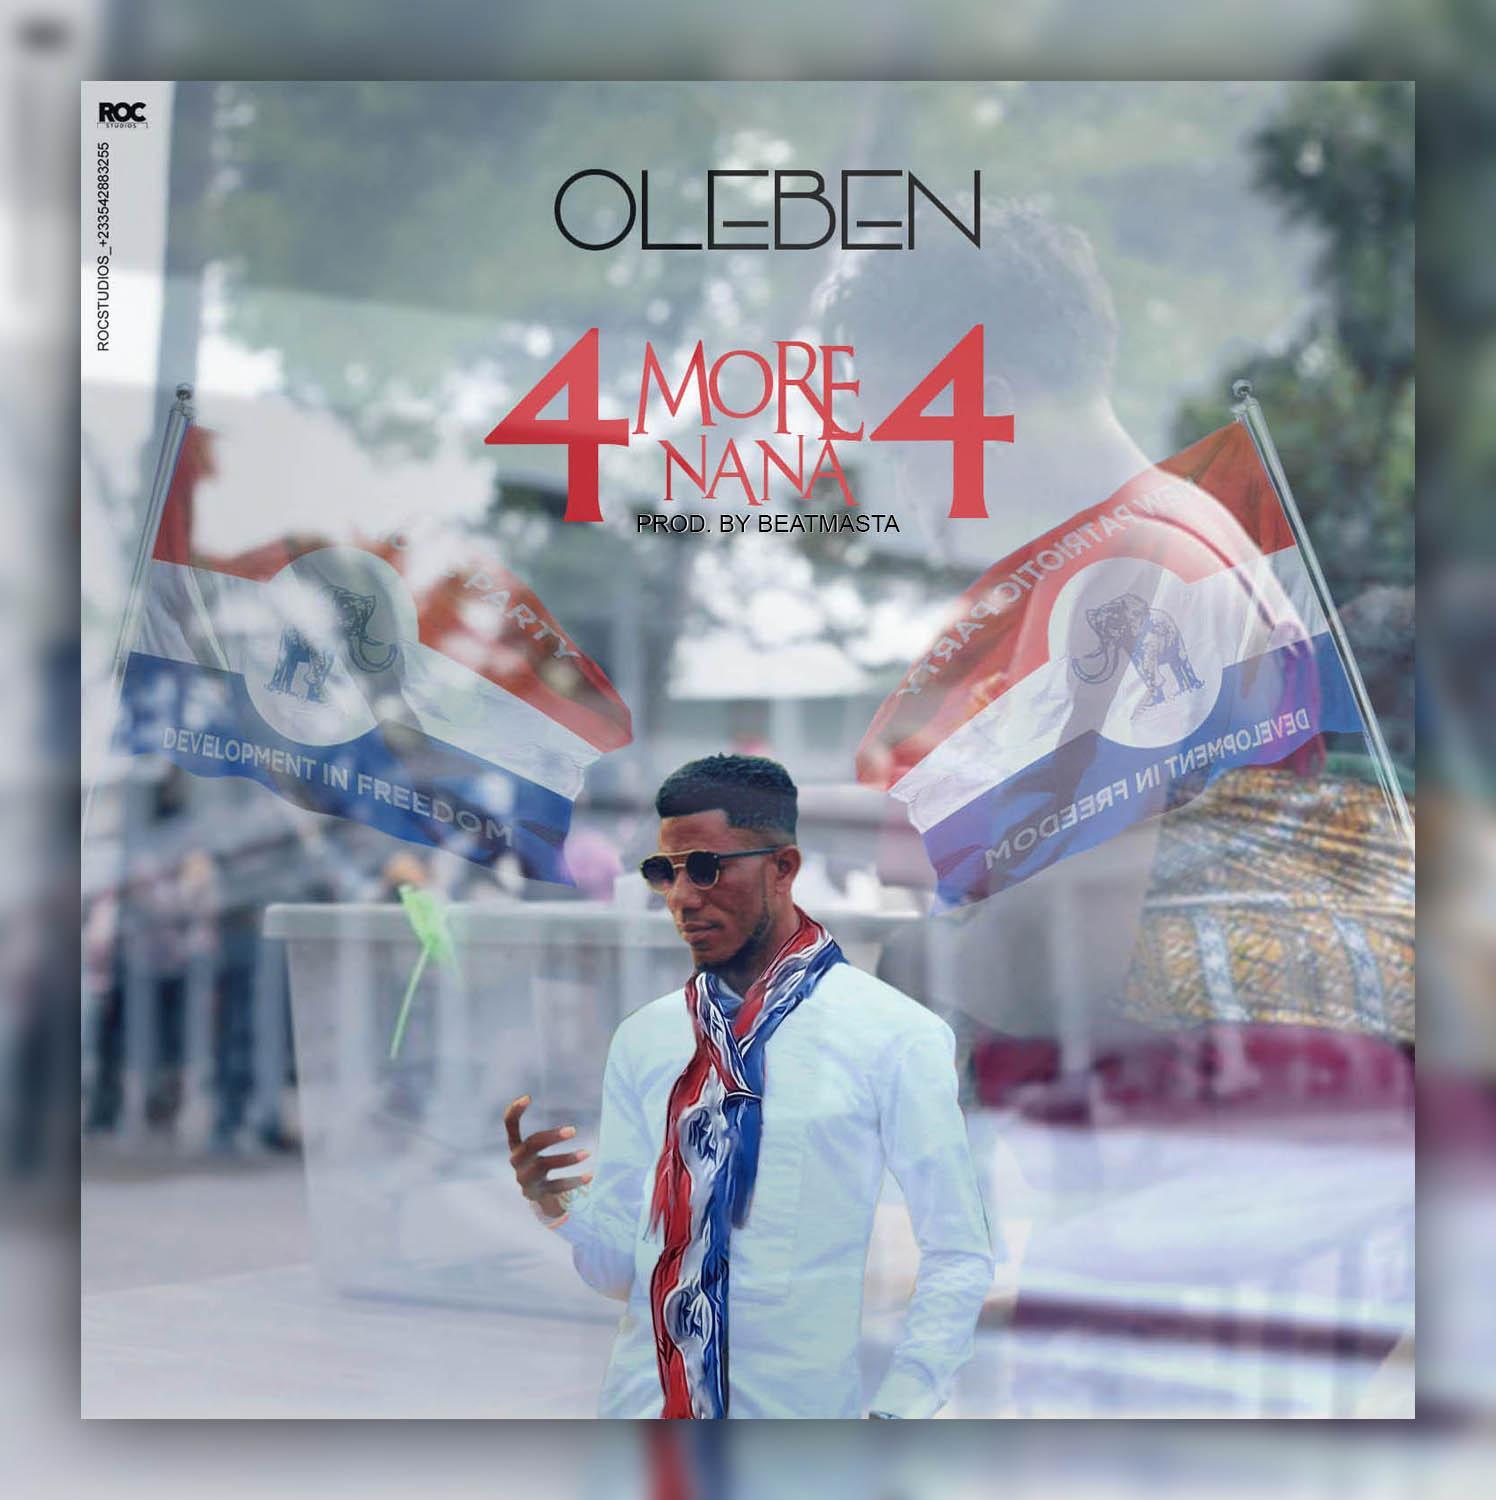 Oleben - 4 More For Nana (NPP 2020 Campaign Song)